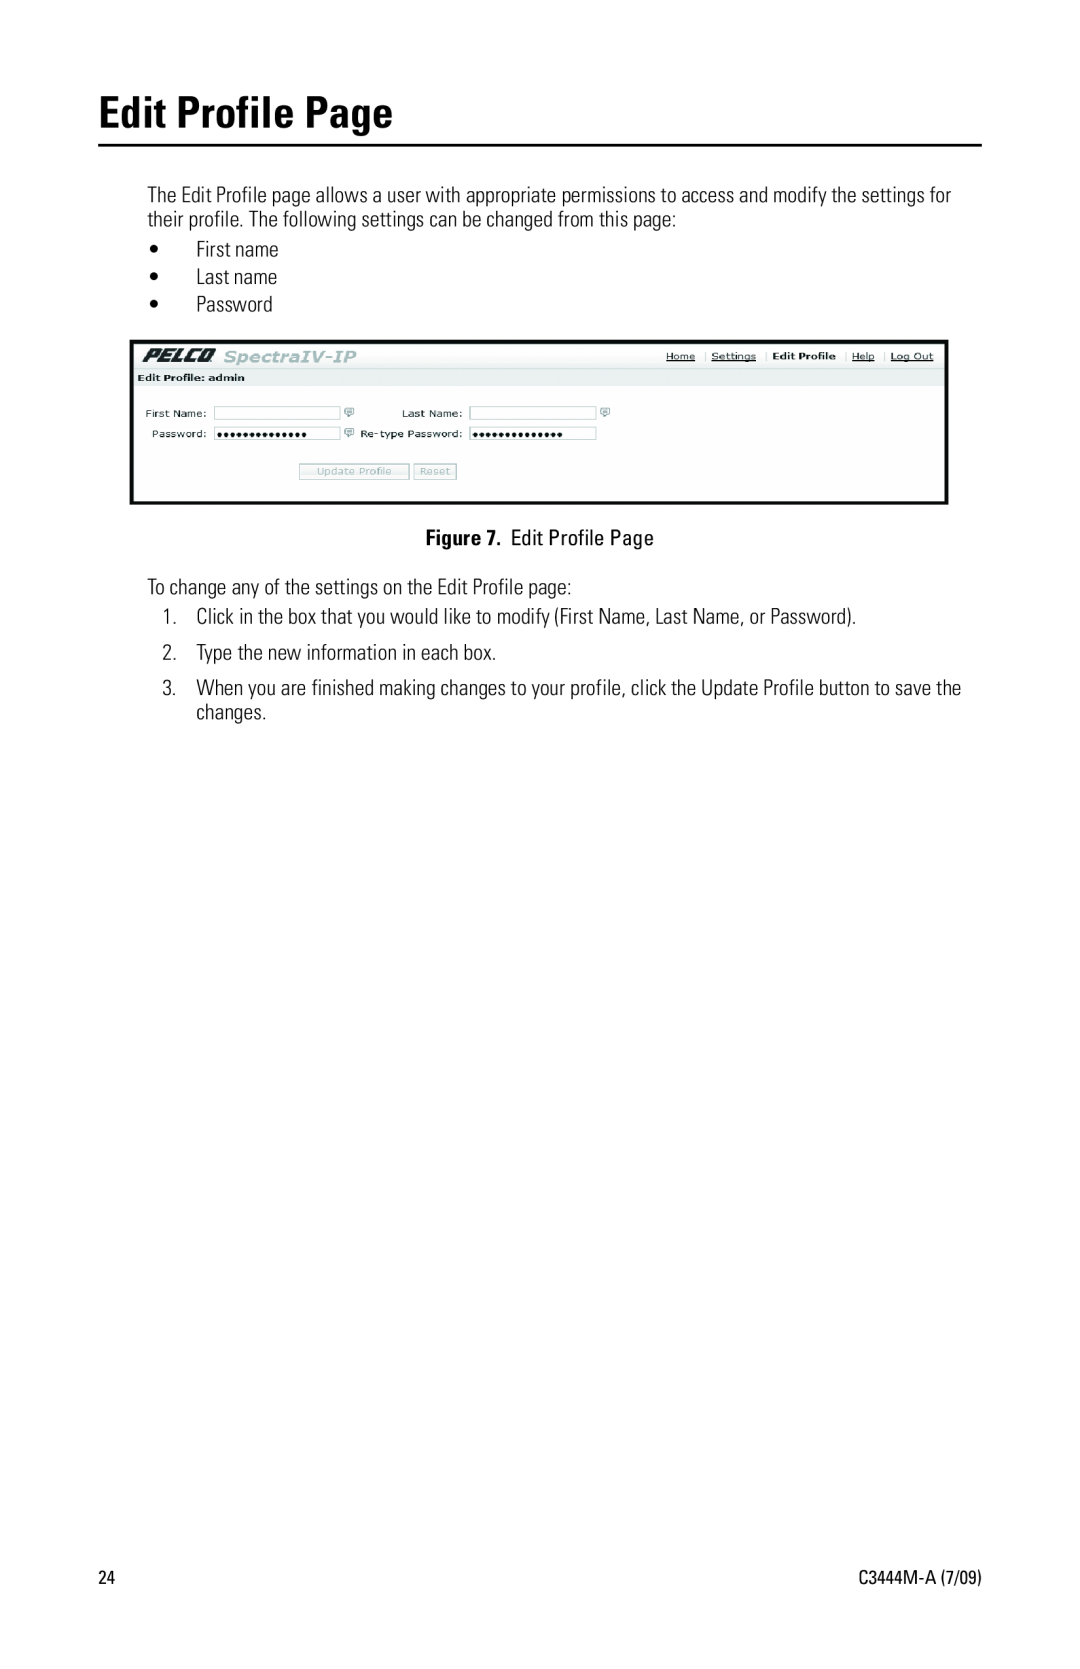 Pelco IV IP manual Edit Profile Page 